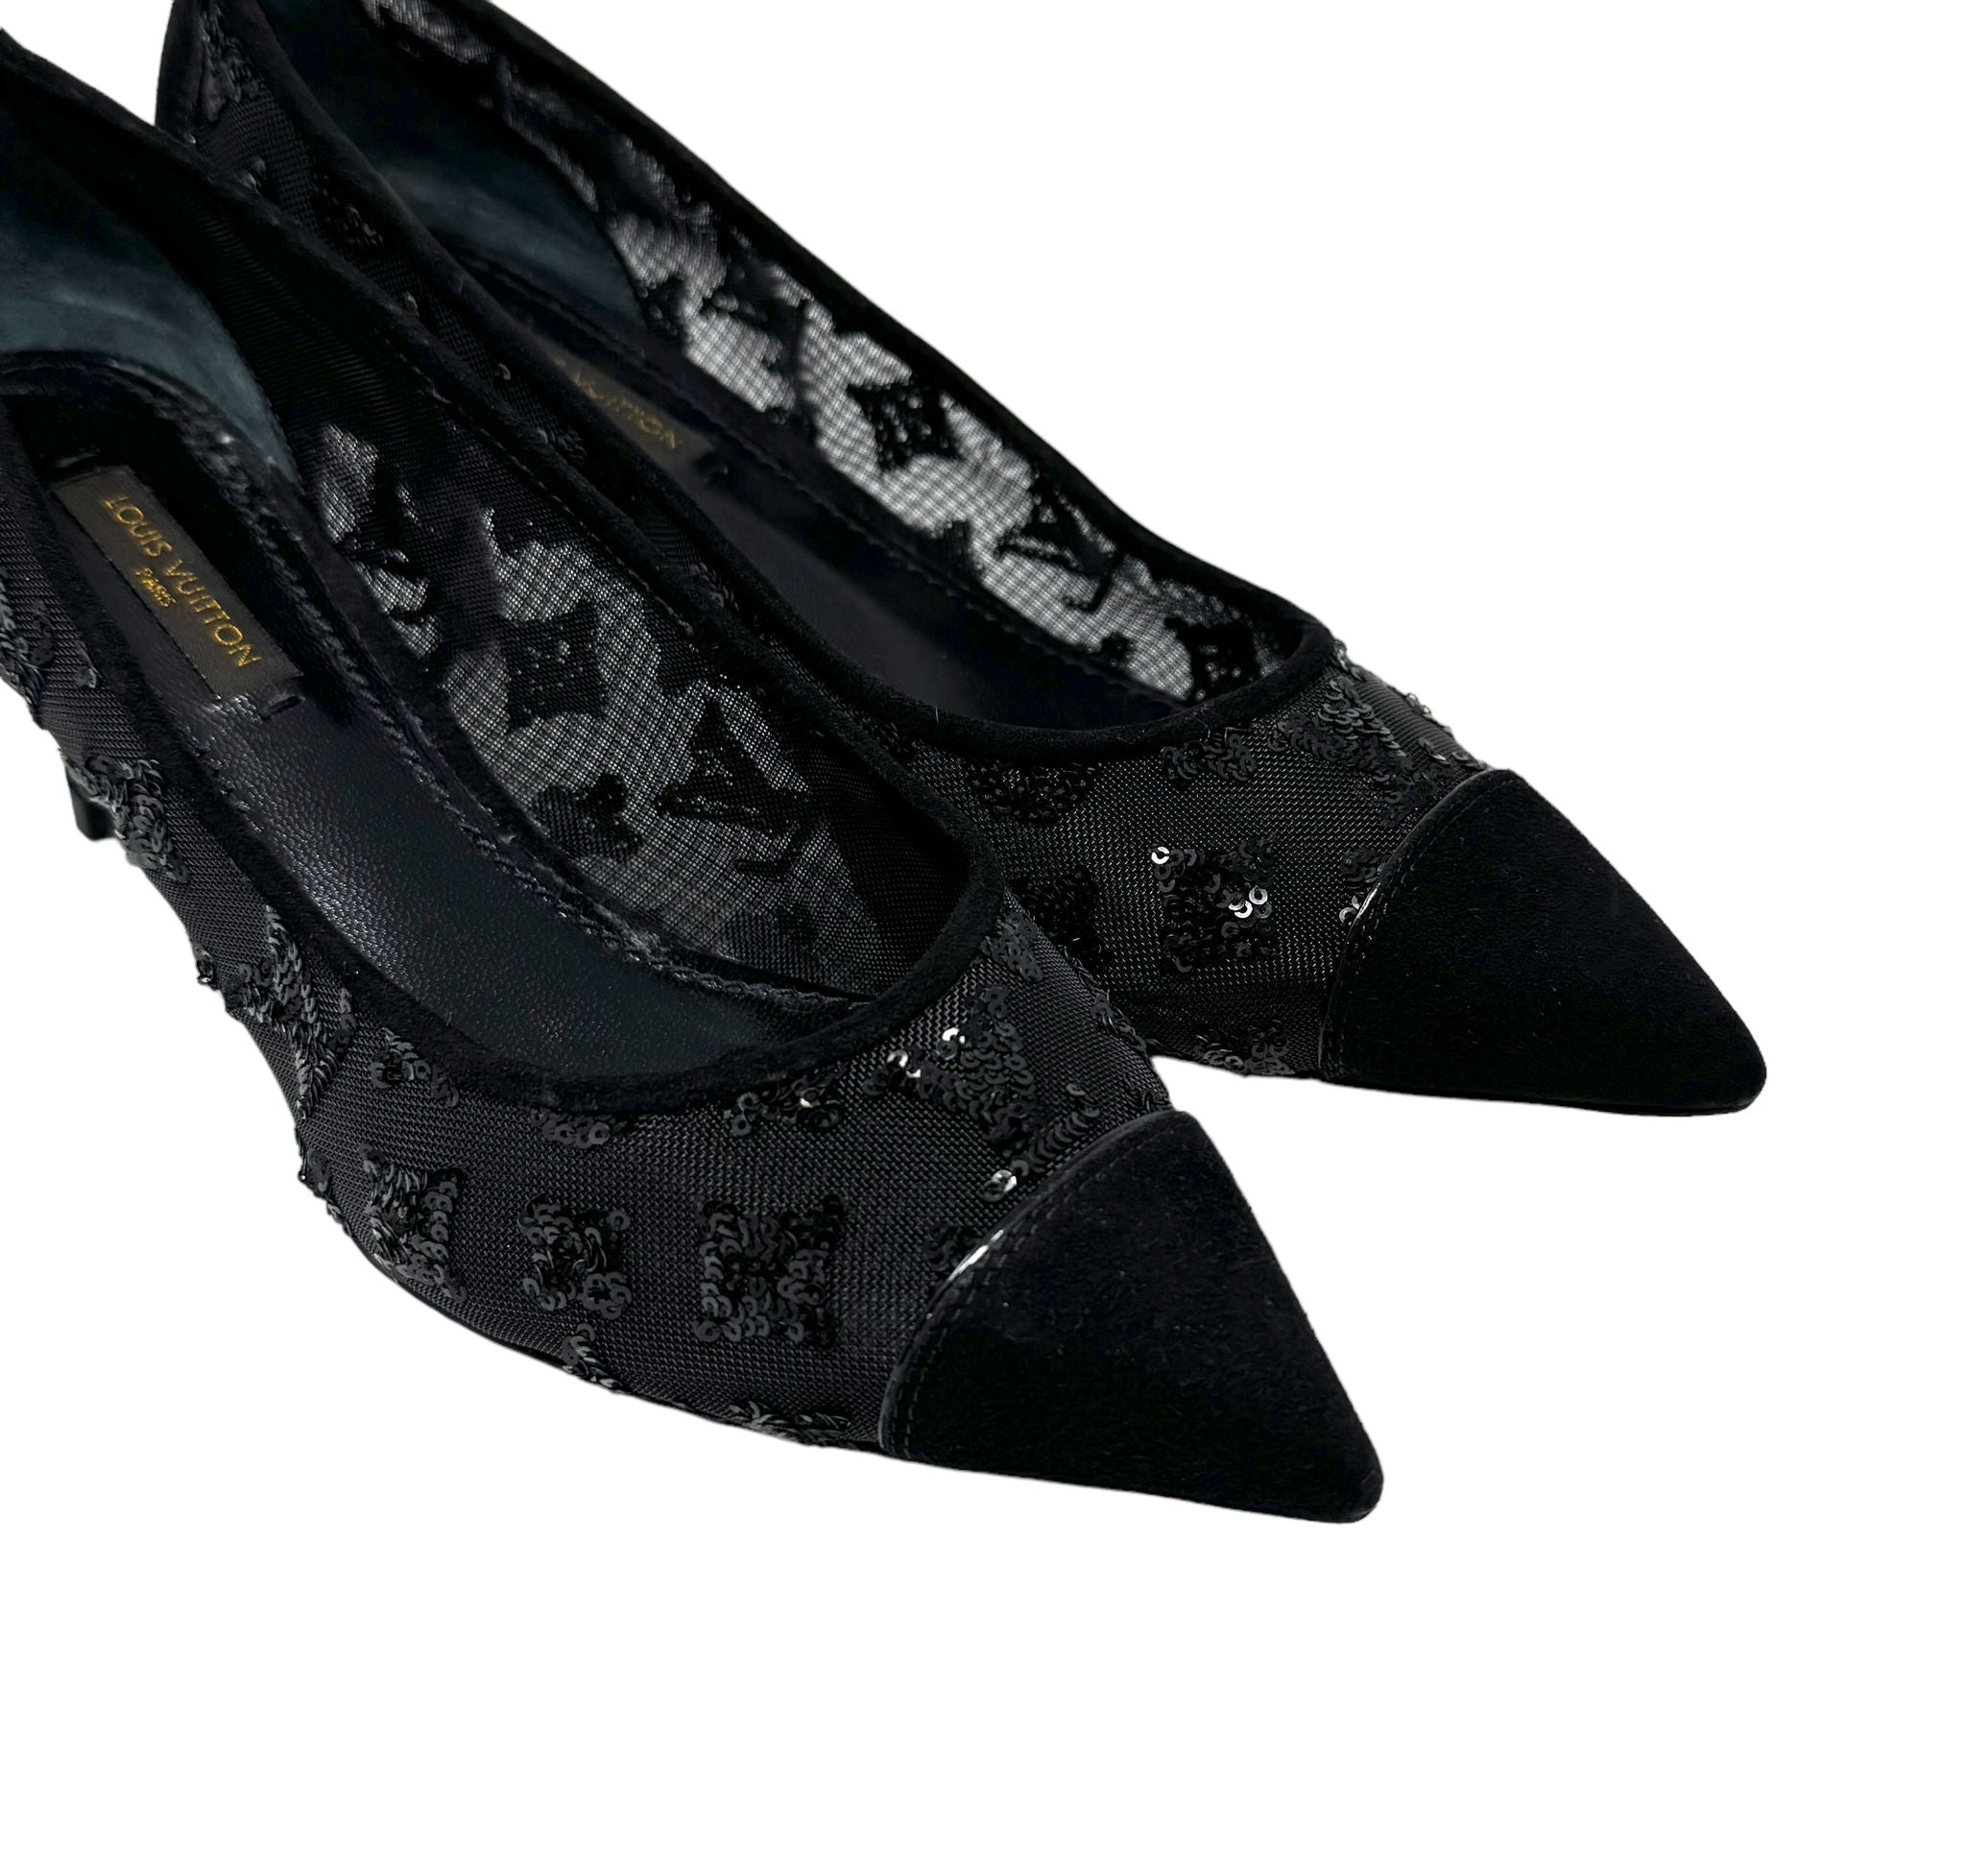 Louis Vuitton - Authenticated Ballet Flats - Suede Black for Women, Good Condition